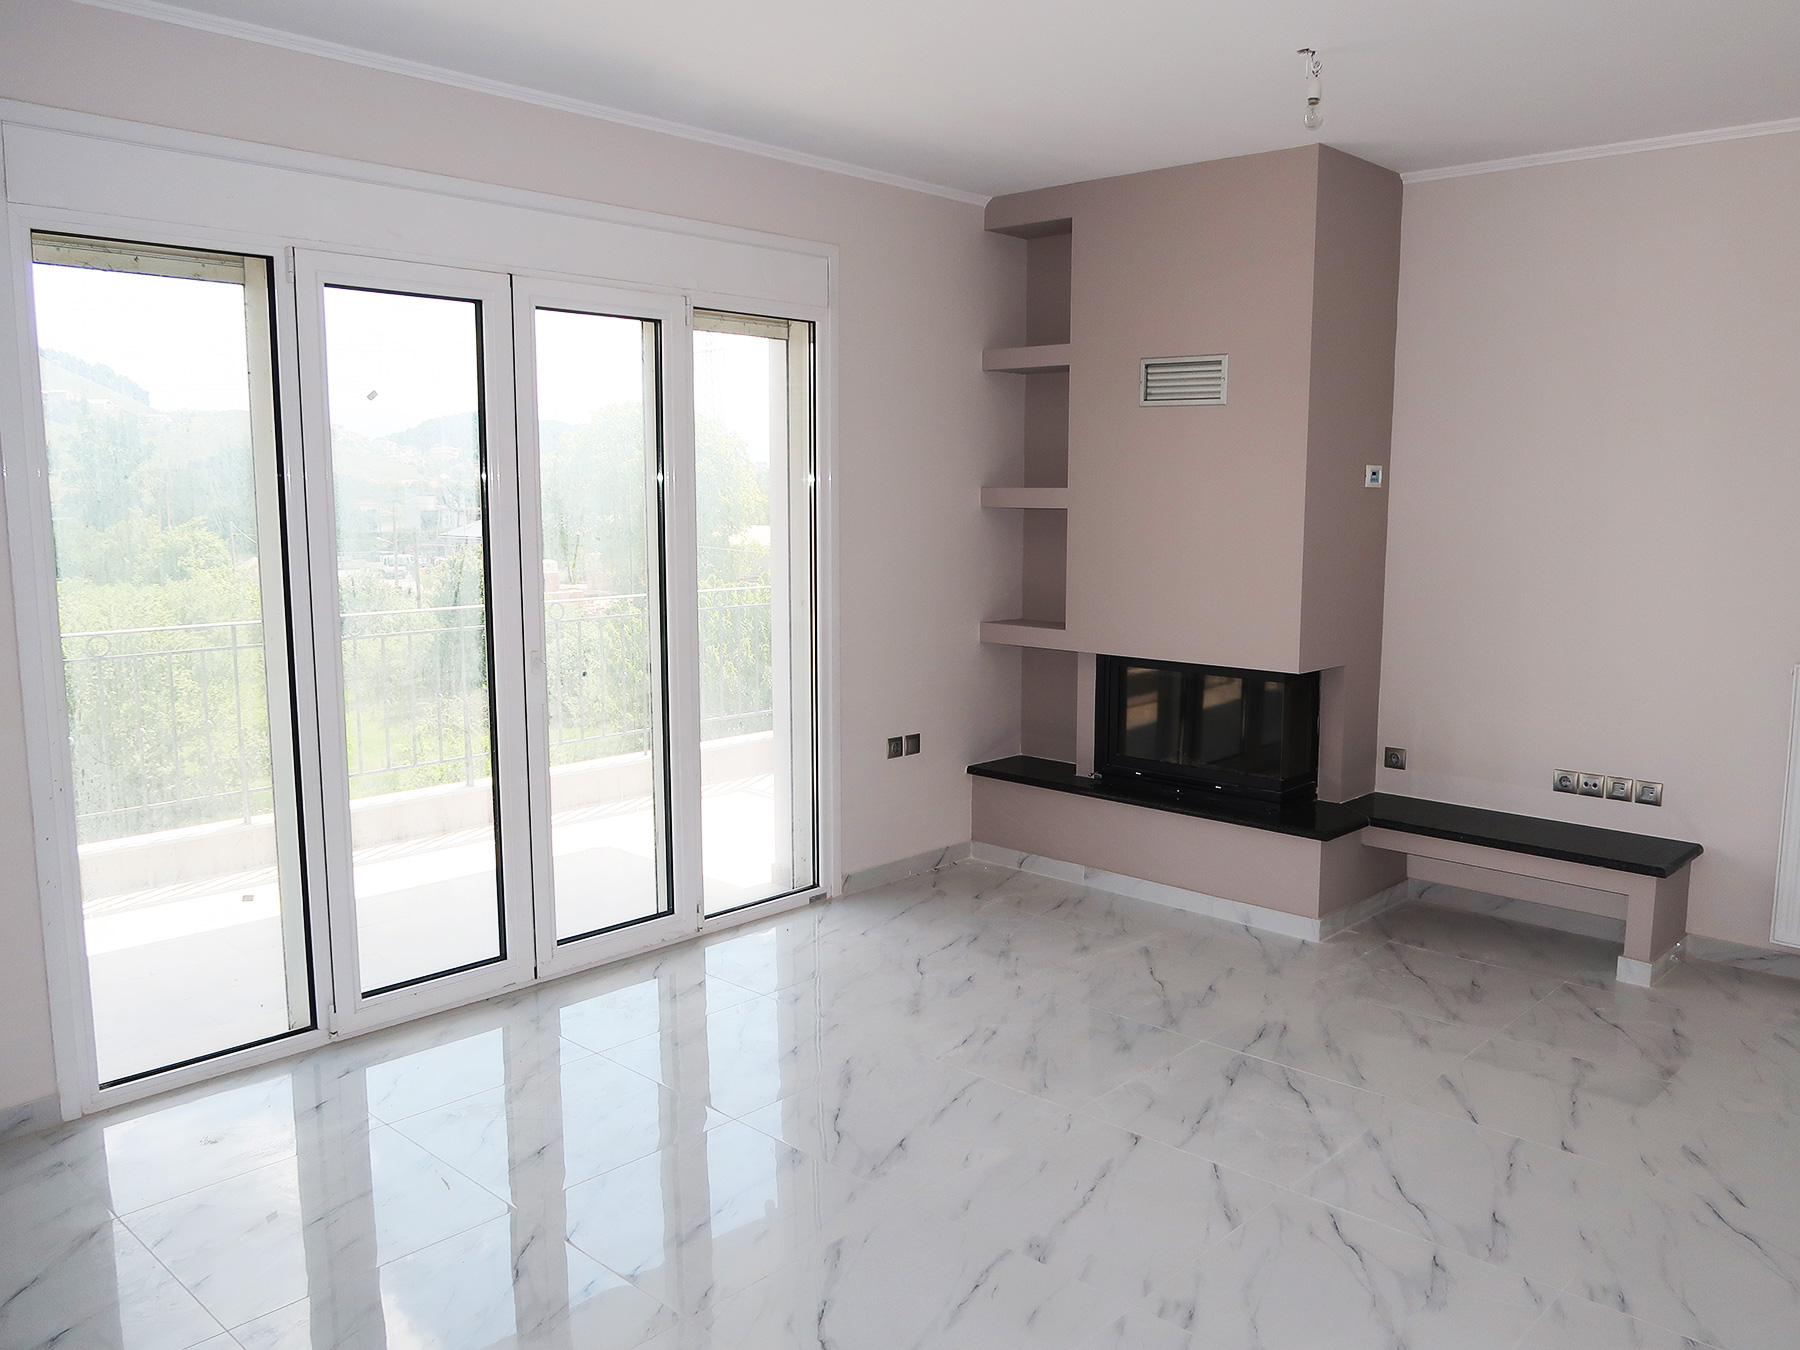 For rent a bright 3 bedrooms apartment of 96 sqm. 2nd floor near Vlachostrata in Stavraki Ioannina